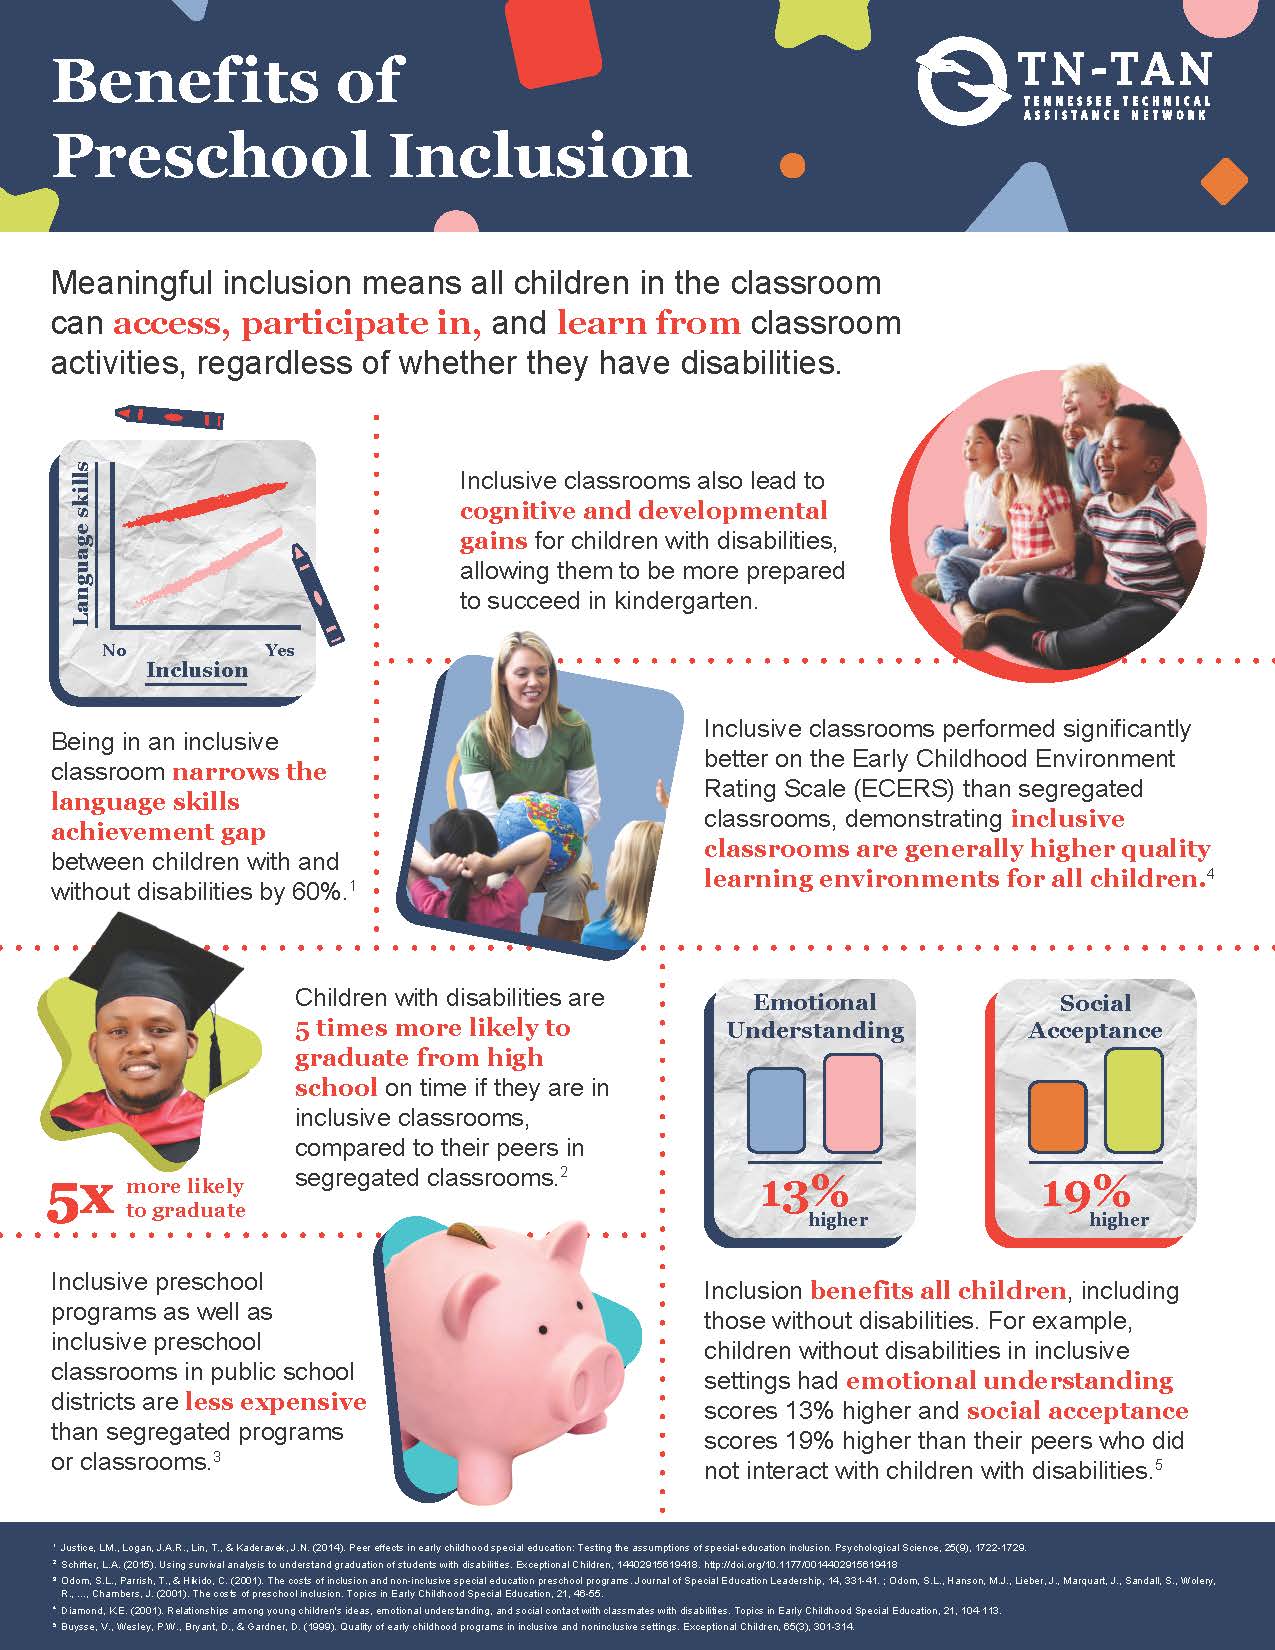 Benefits of Preschool Inclusion